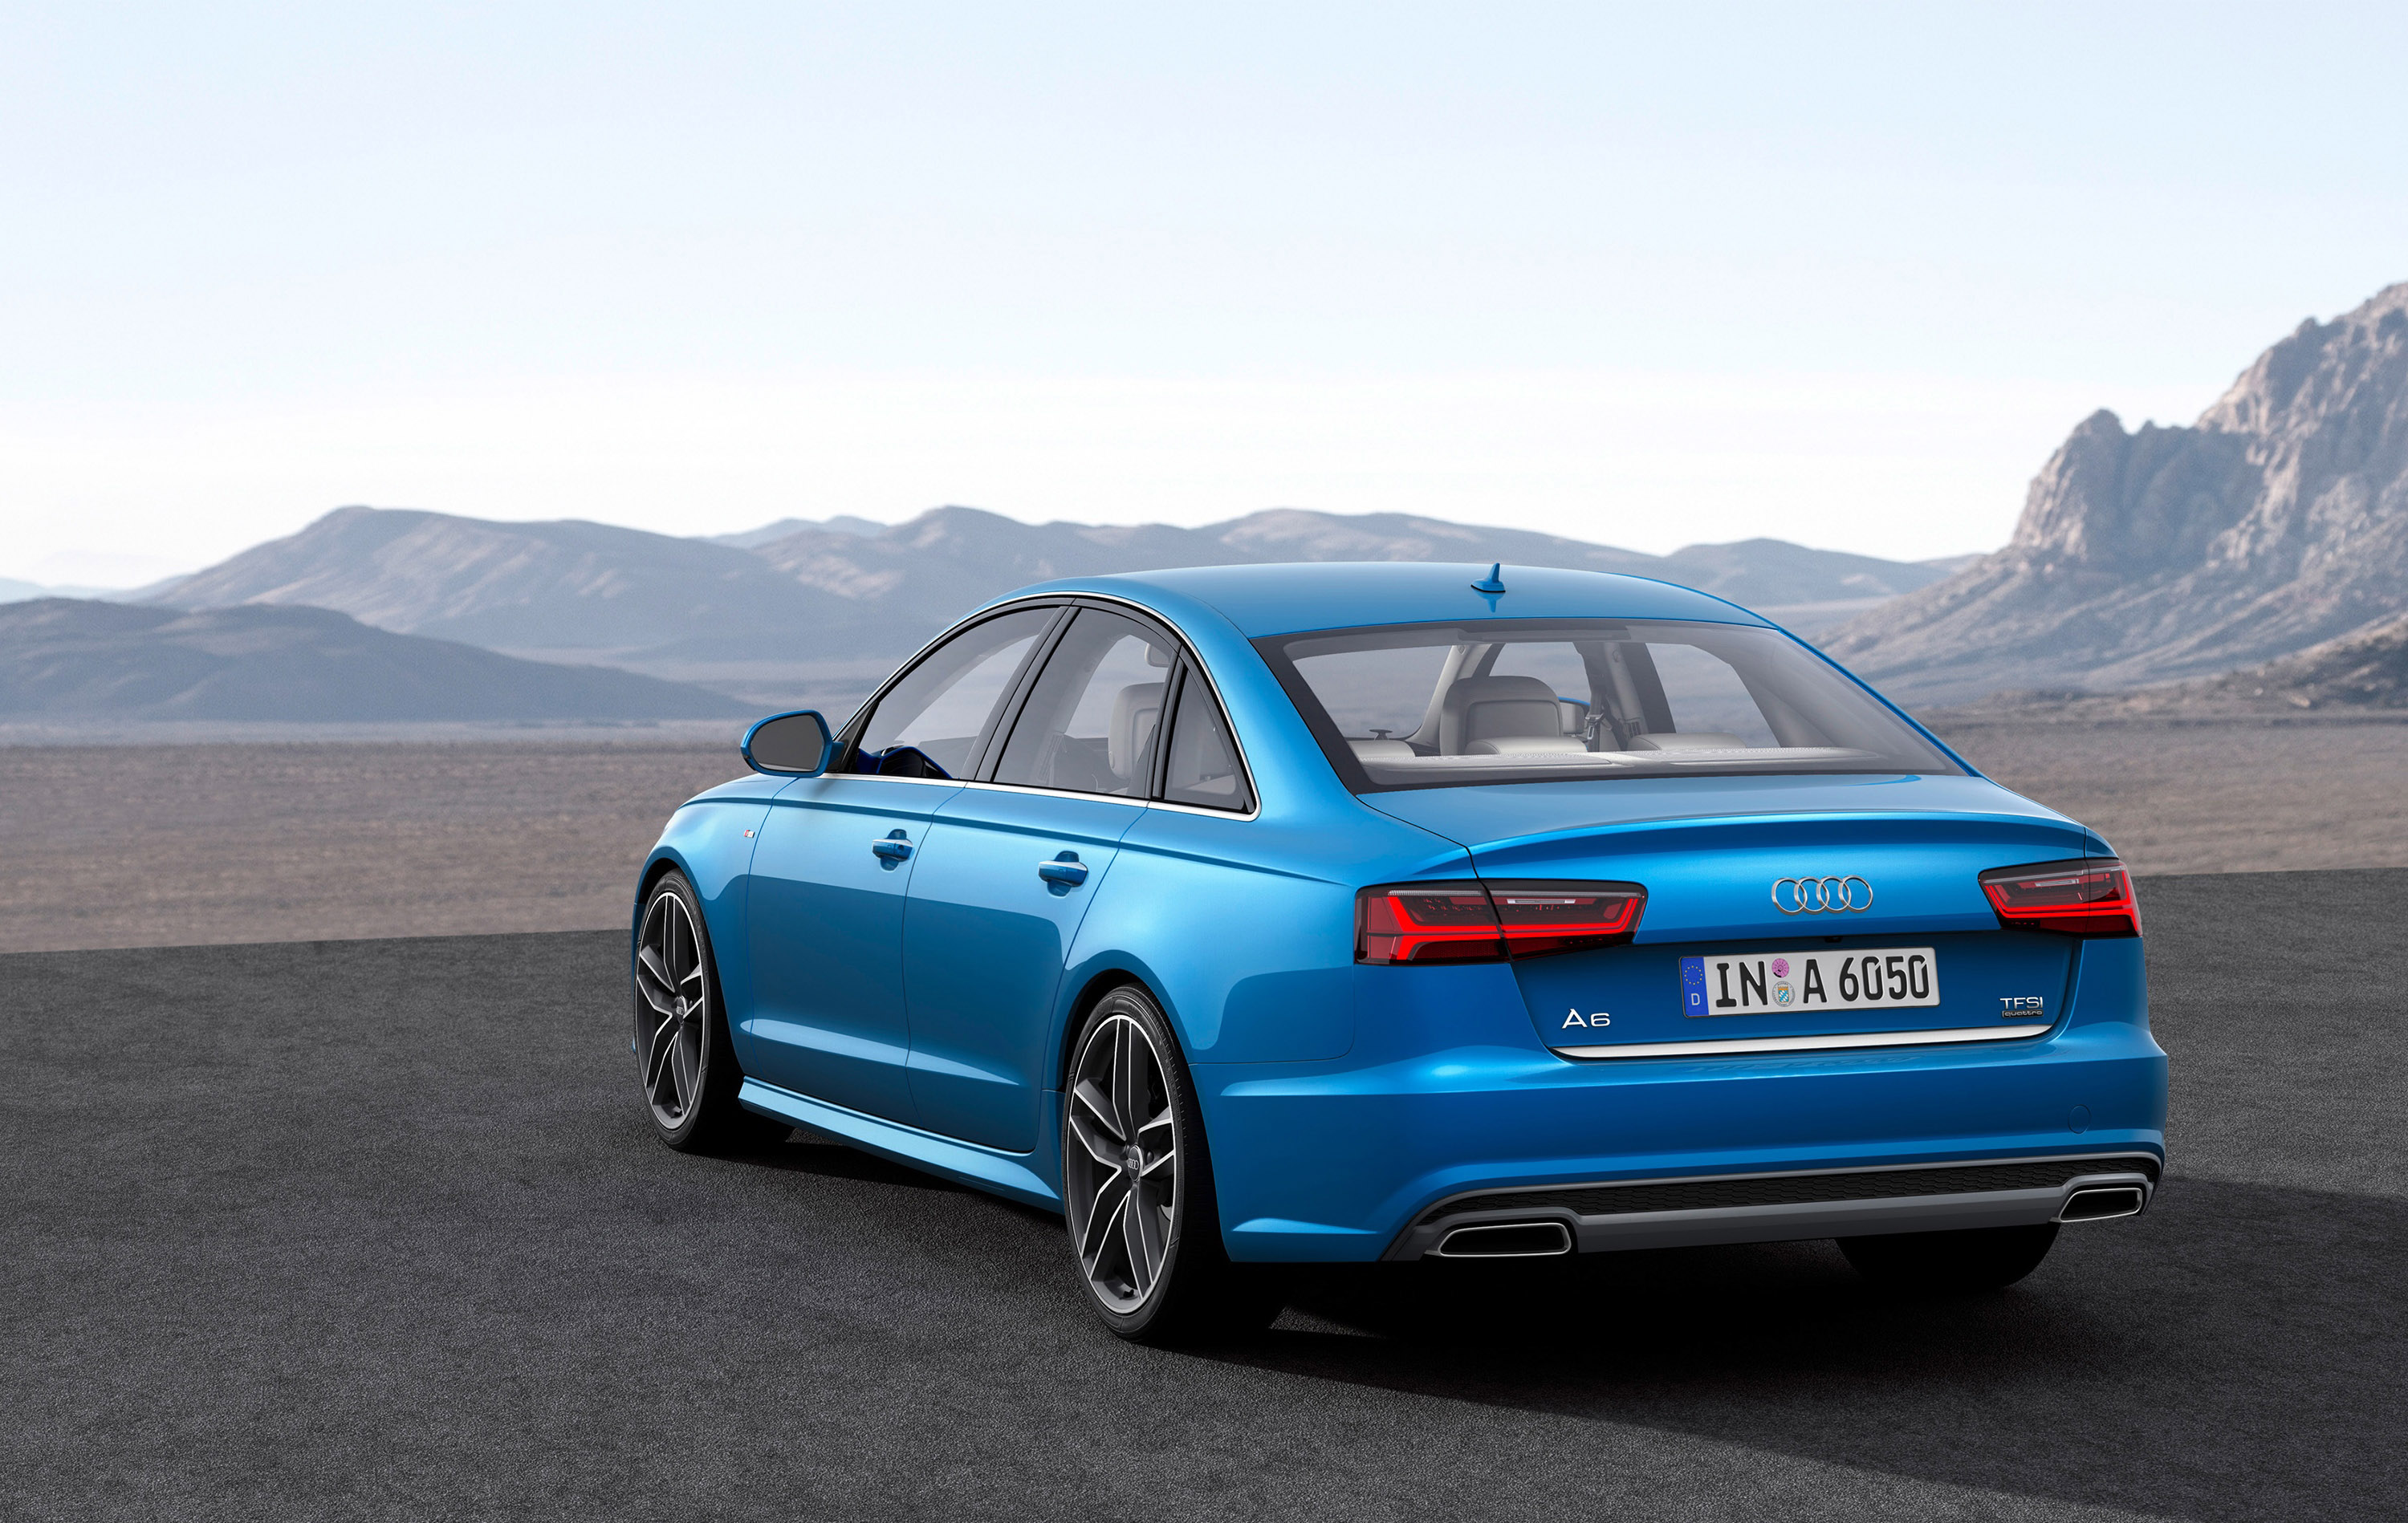 Meet the 2016 Audi A6 Range